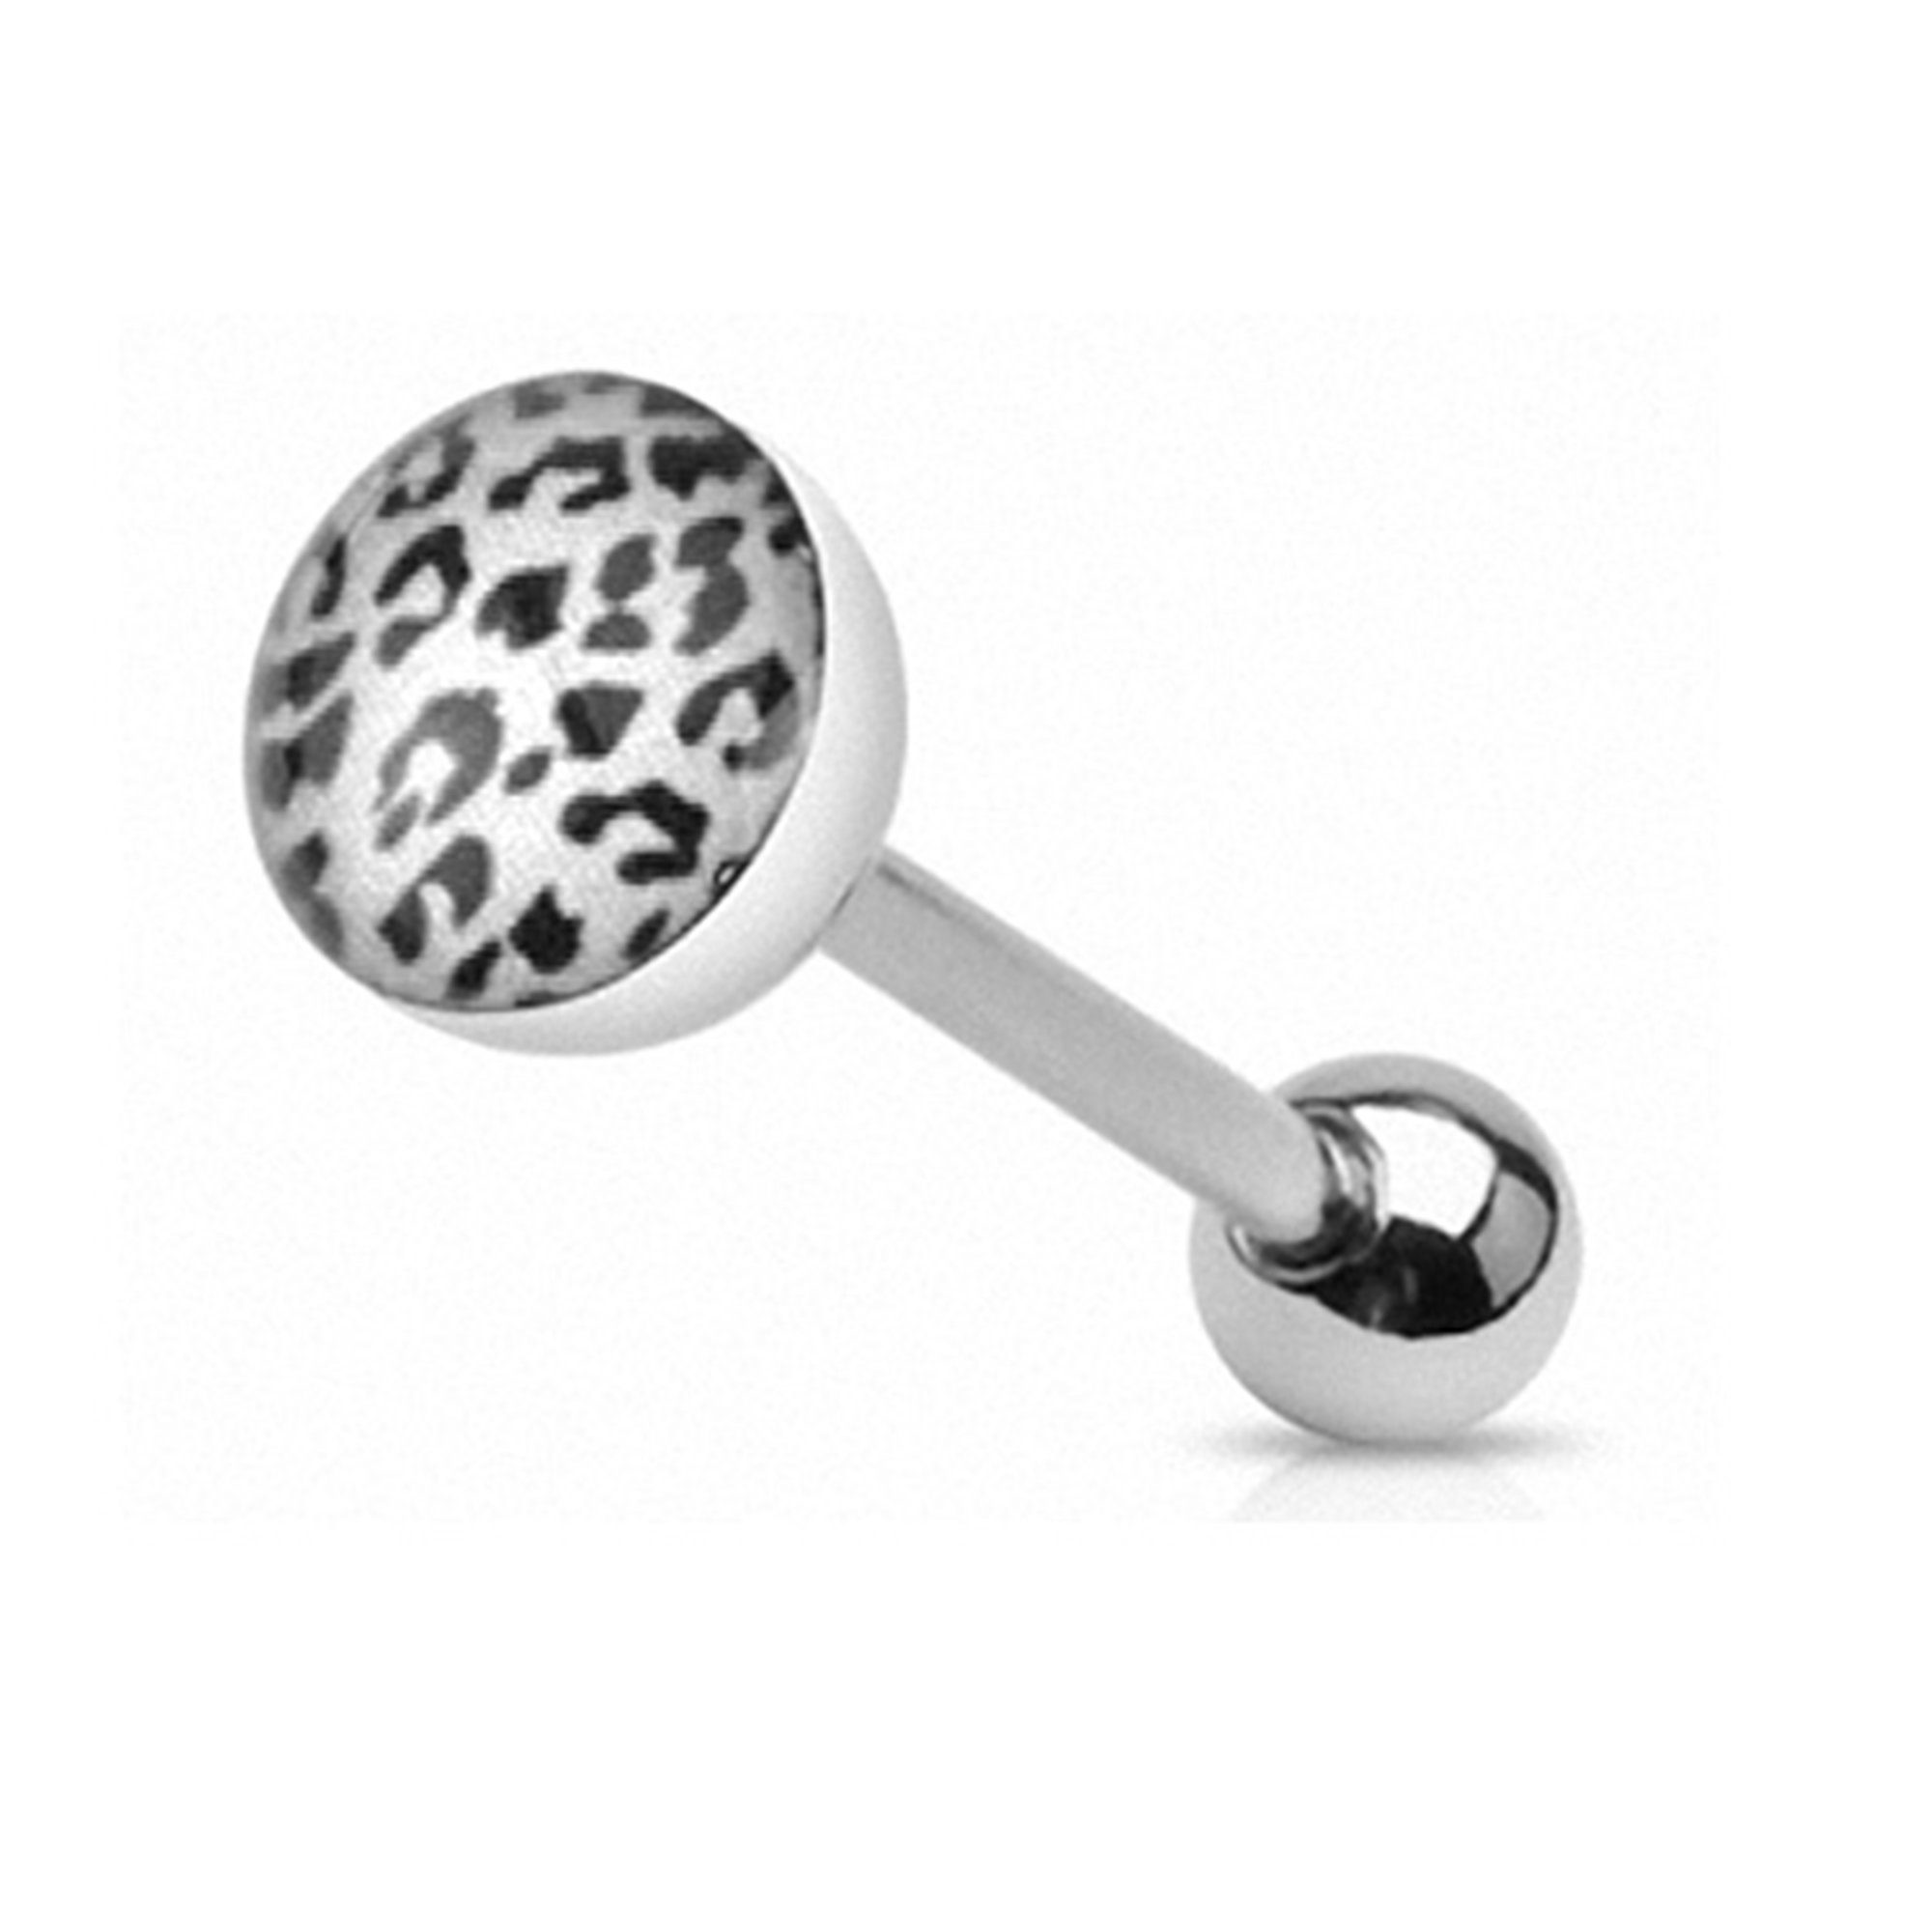 Taffstyle Piercing-Set Zungenpiercing Ohr Kugel Epoxy Leopard Logo Ball, Piercingfaktor Barbell Stab Stecker Intim Brust Oral Ohr Tragus Helix Weiß | Piercings